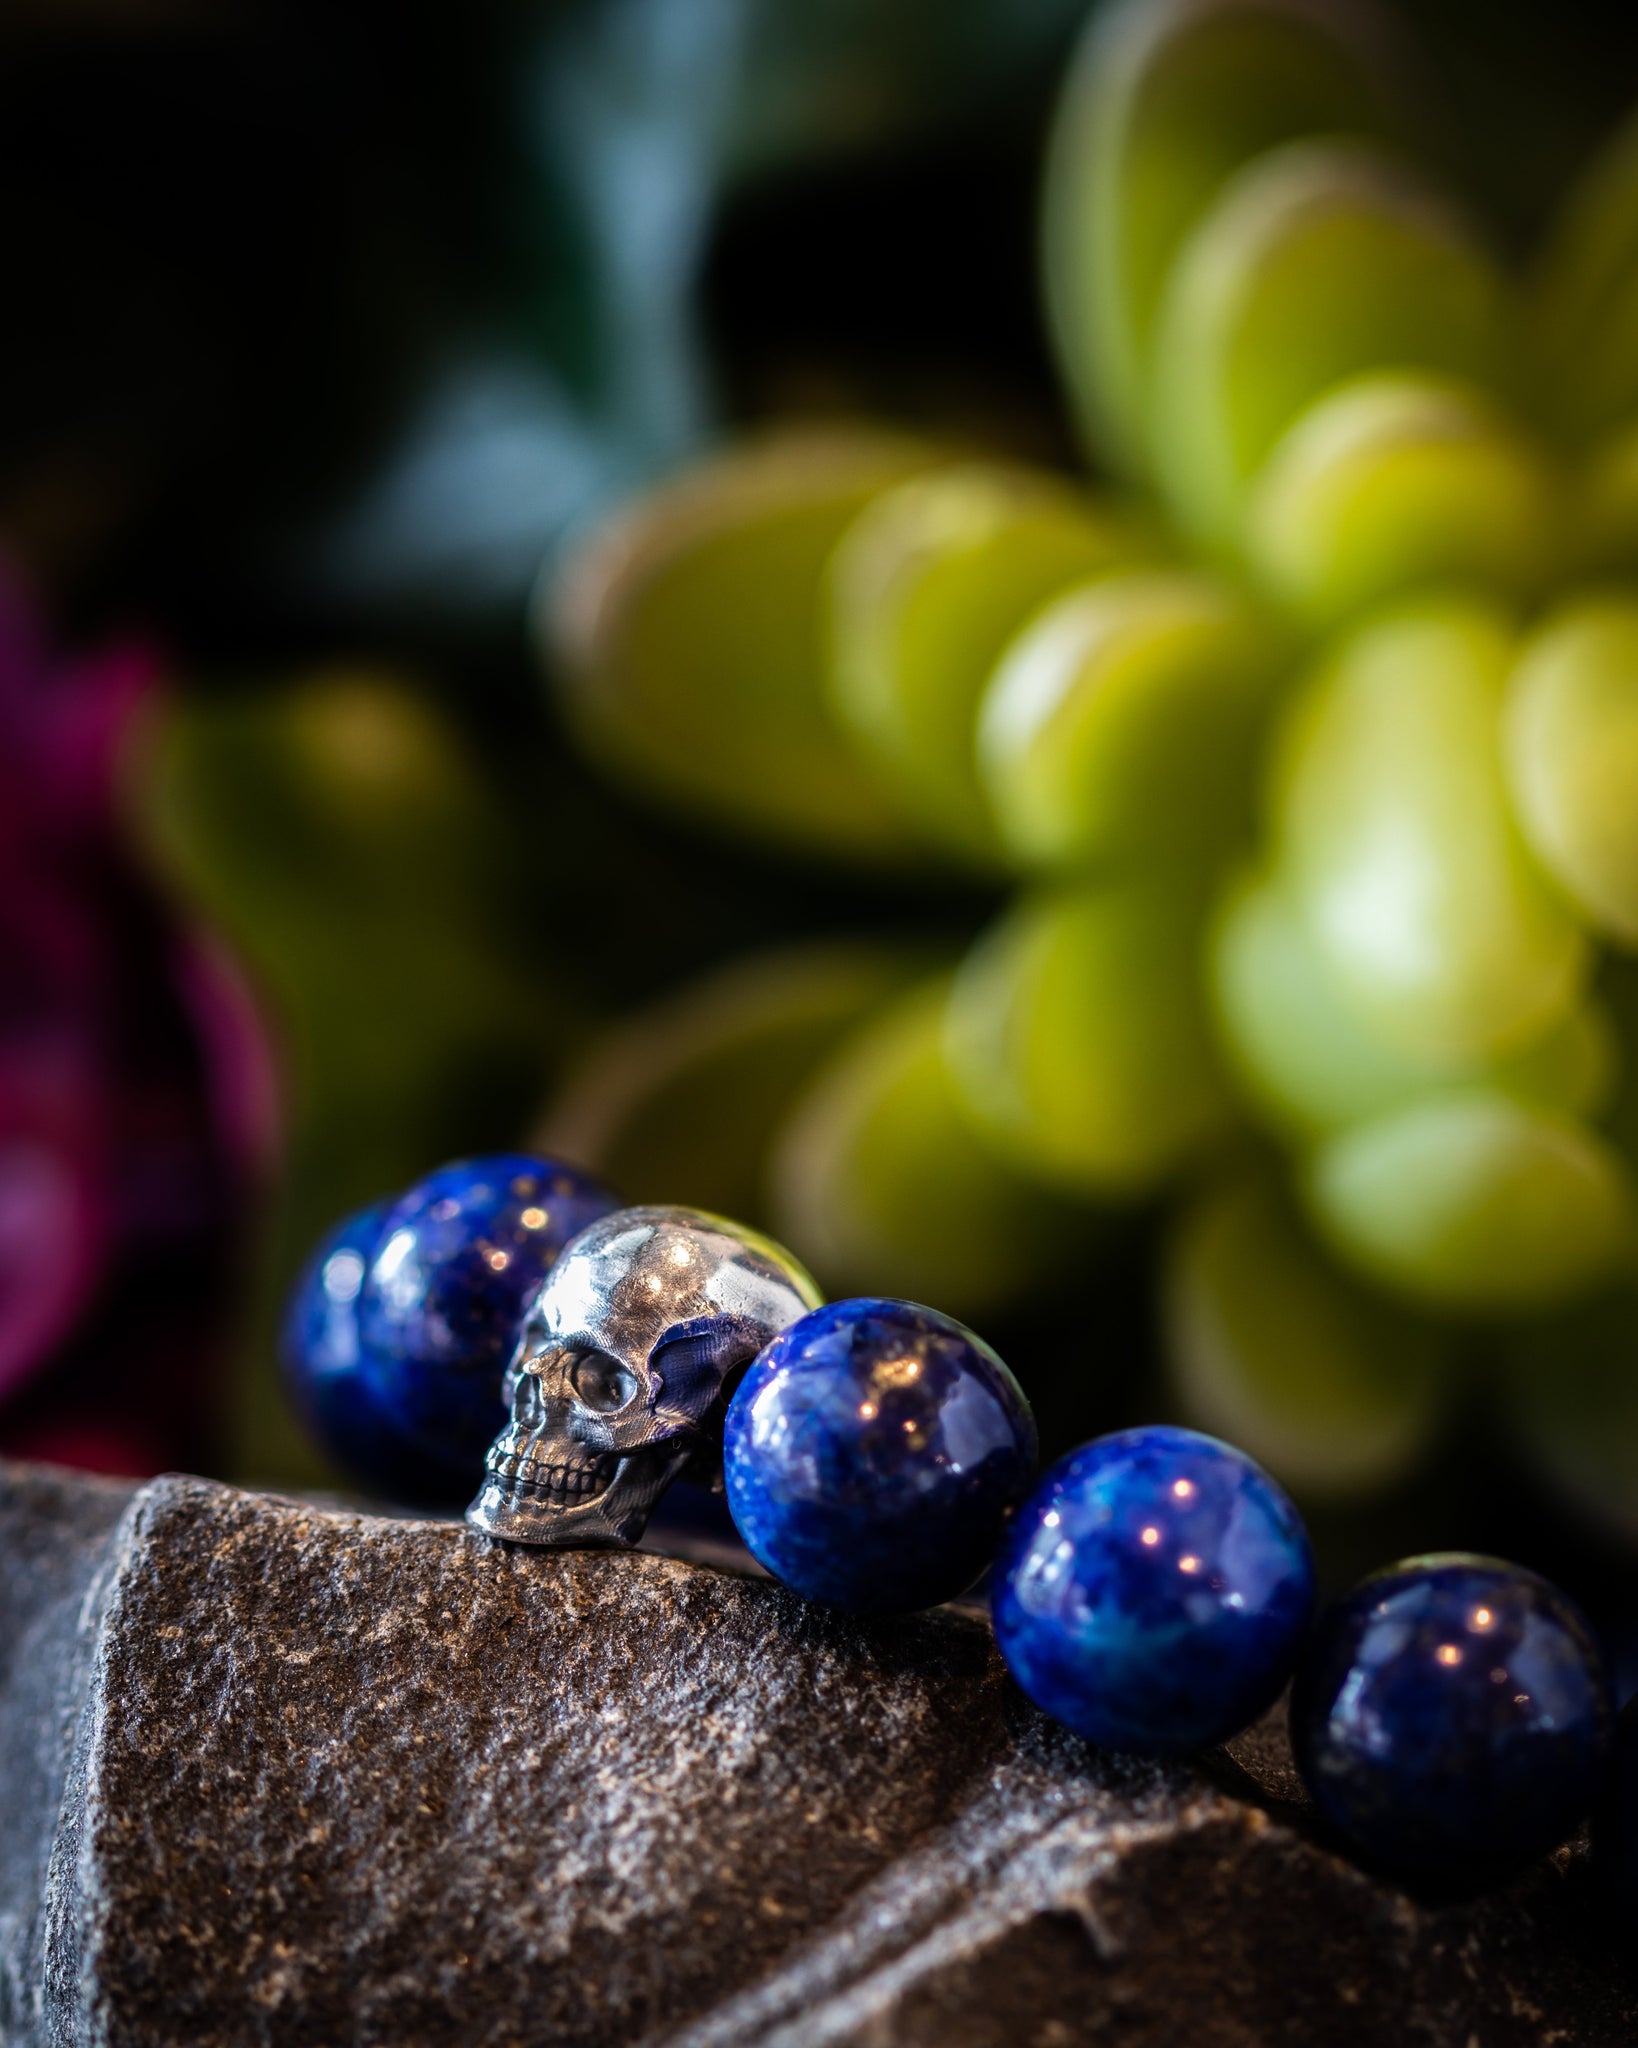 Lapis Lazuli Bracelet, Stone for Friendship and Purification –  karmanepalcrafts